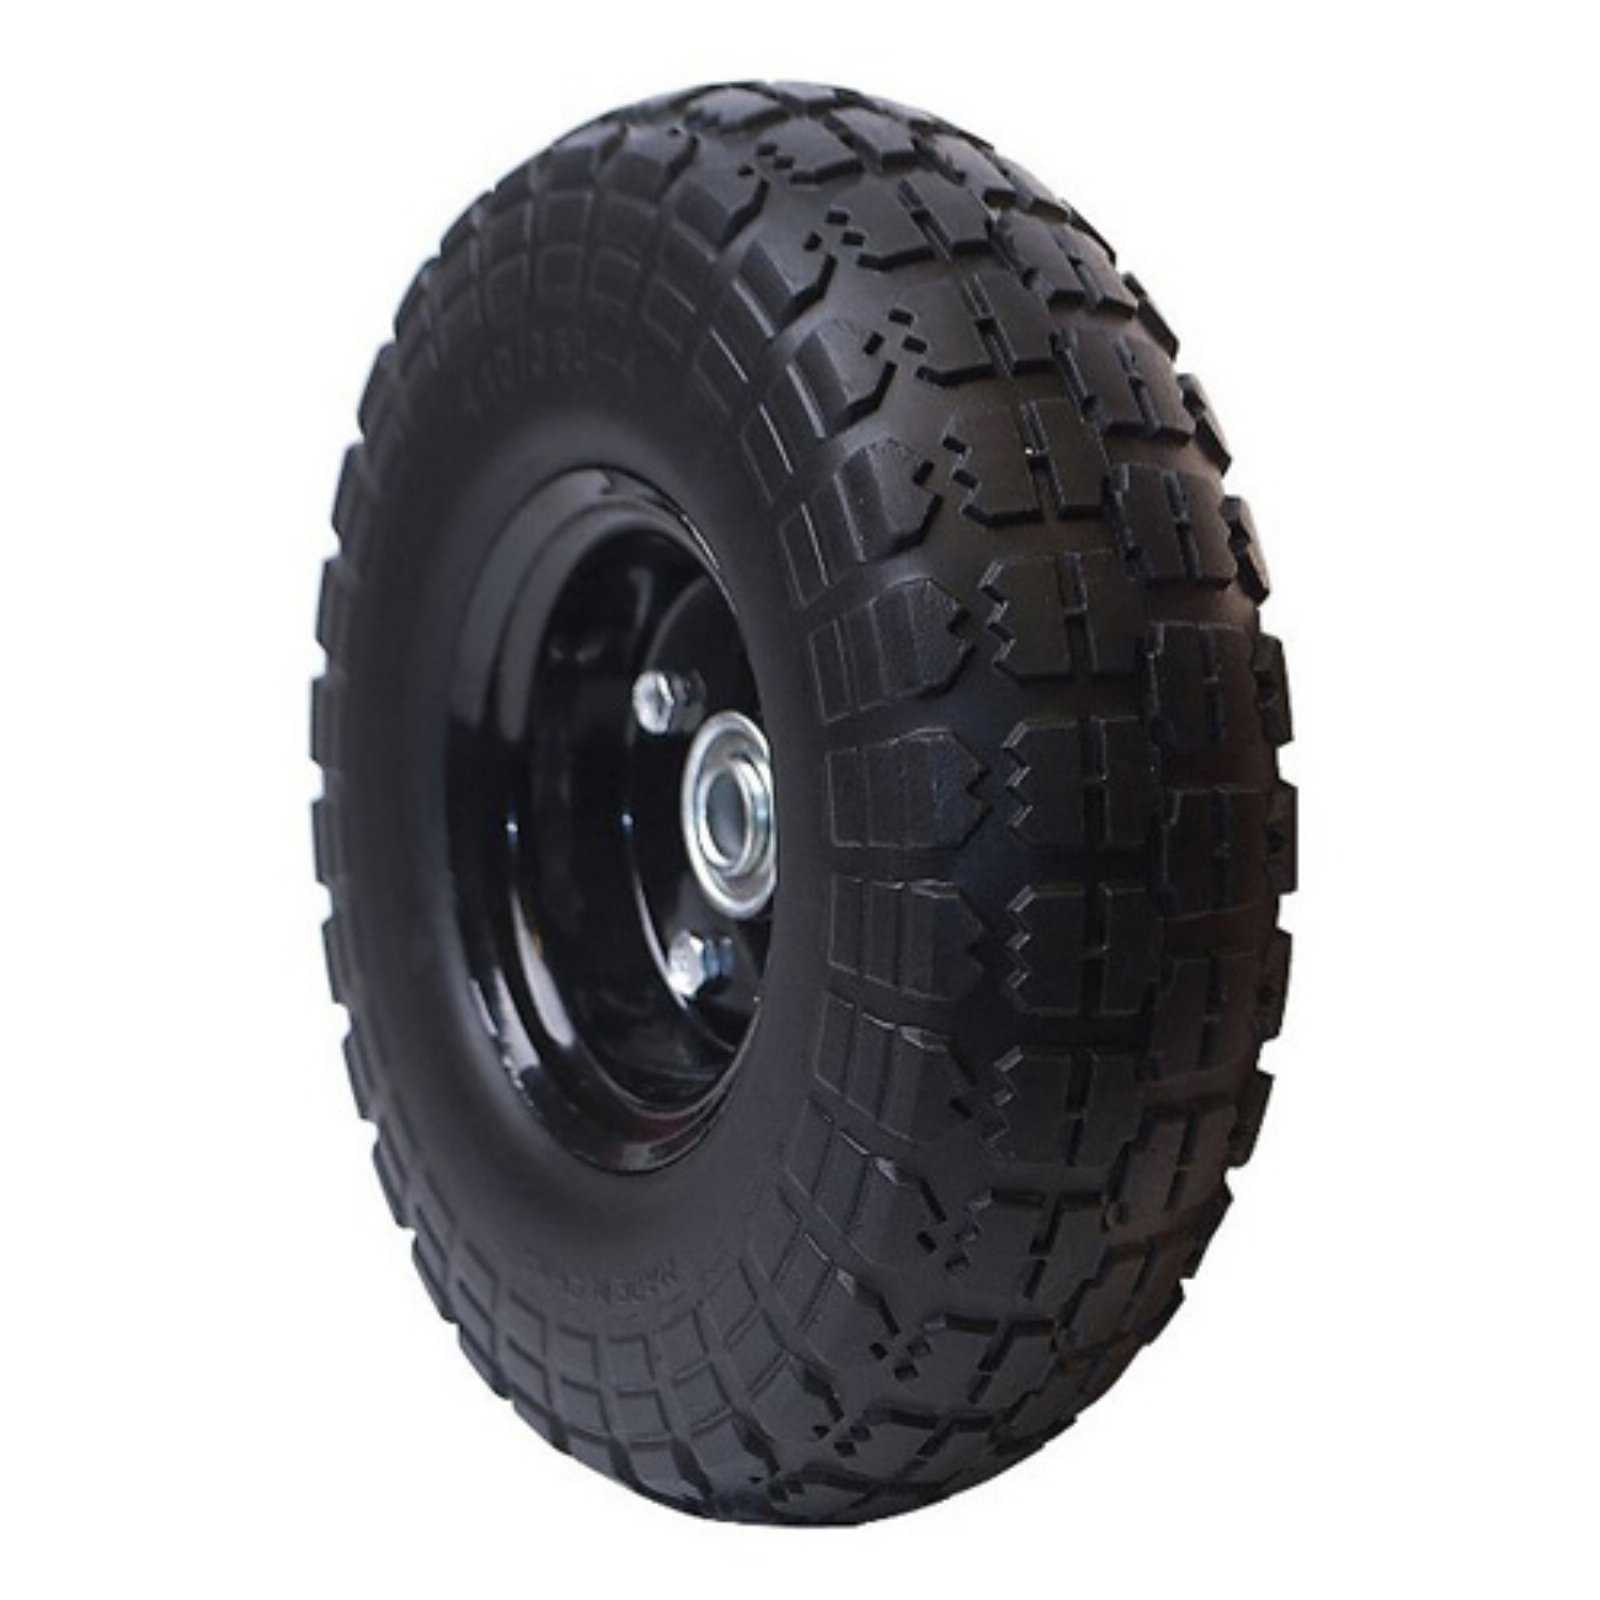 ALEKO WNF10 Anti Flat Replacement Turf Wheels for Wheelbarrow 10 Inches No Flat Tire, Black